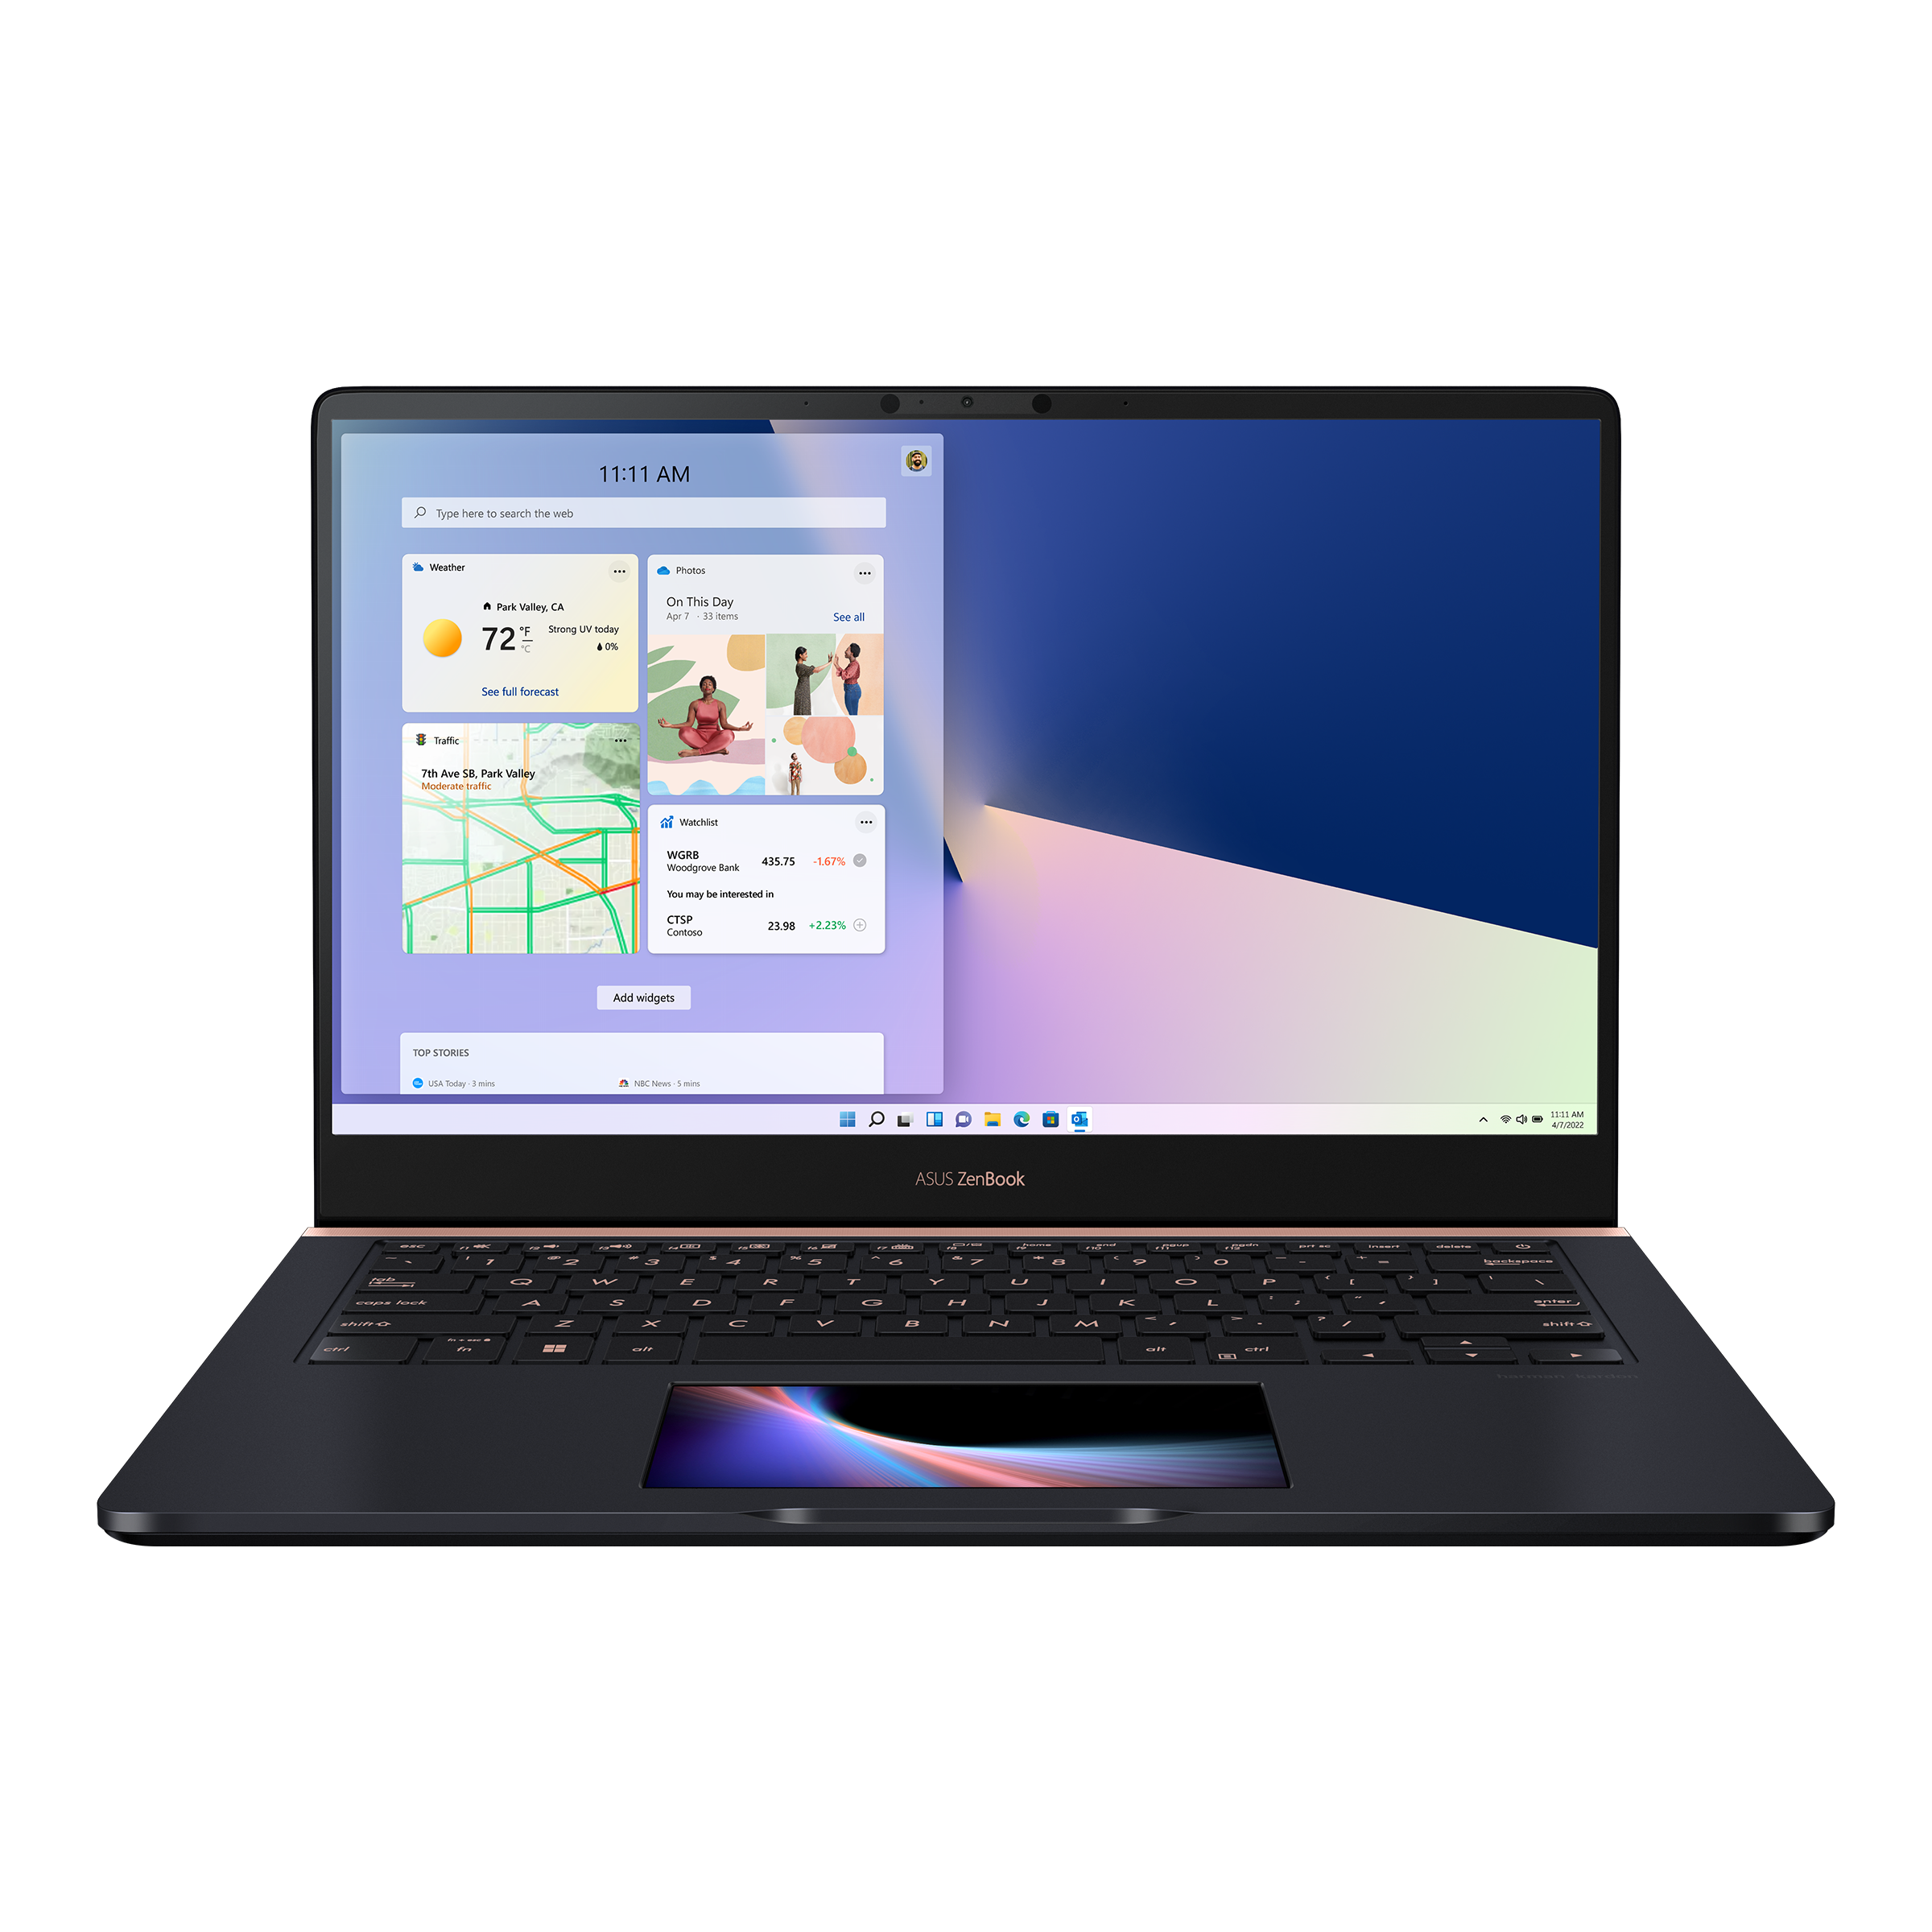 Zenbook Pro 14 UX480｜Laptops For Home｜ASUS Global